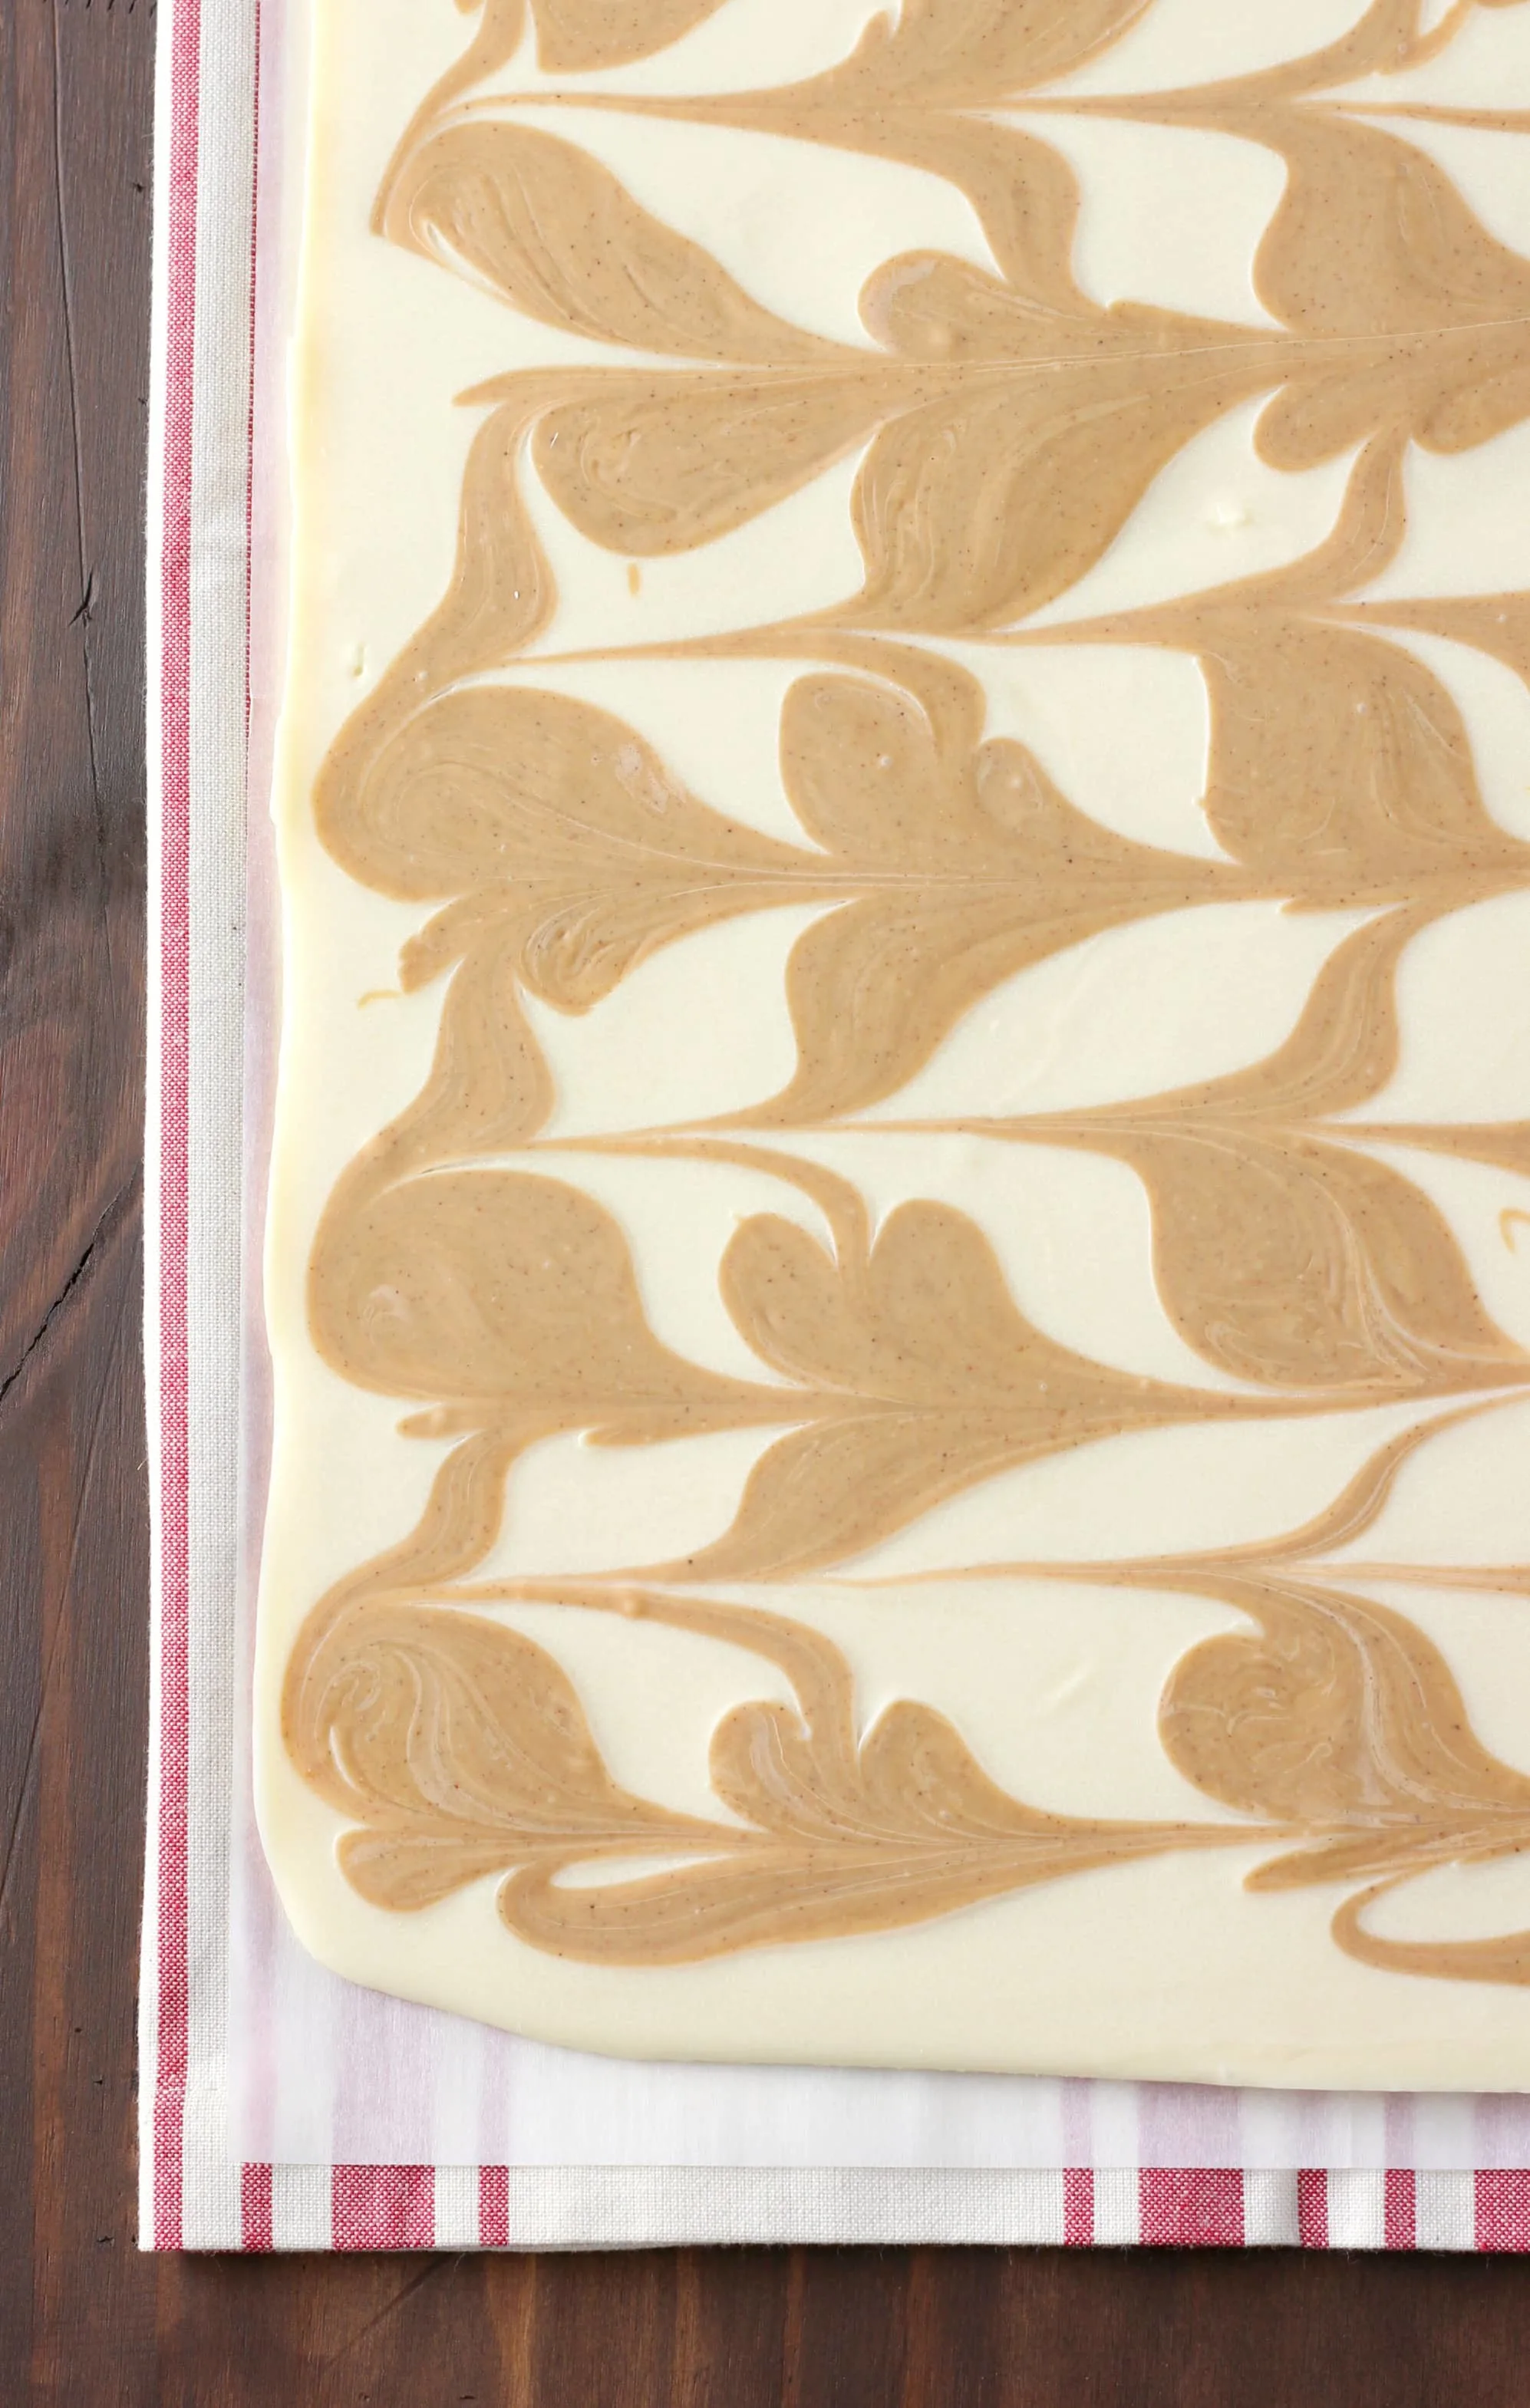 3 Ingredient Swirled Cookie Butter Bark Recipe form A Kitchen Addiction